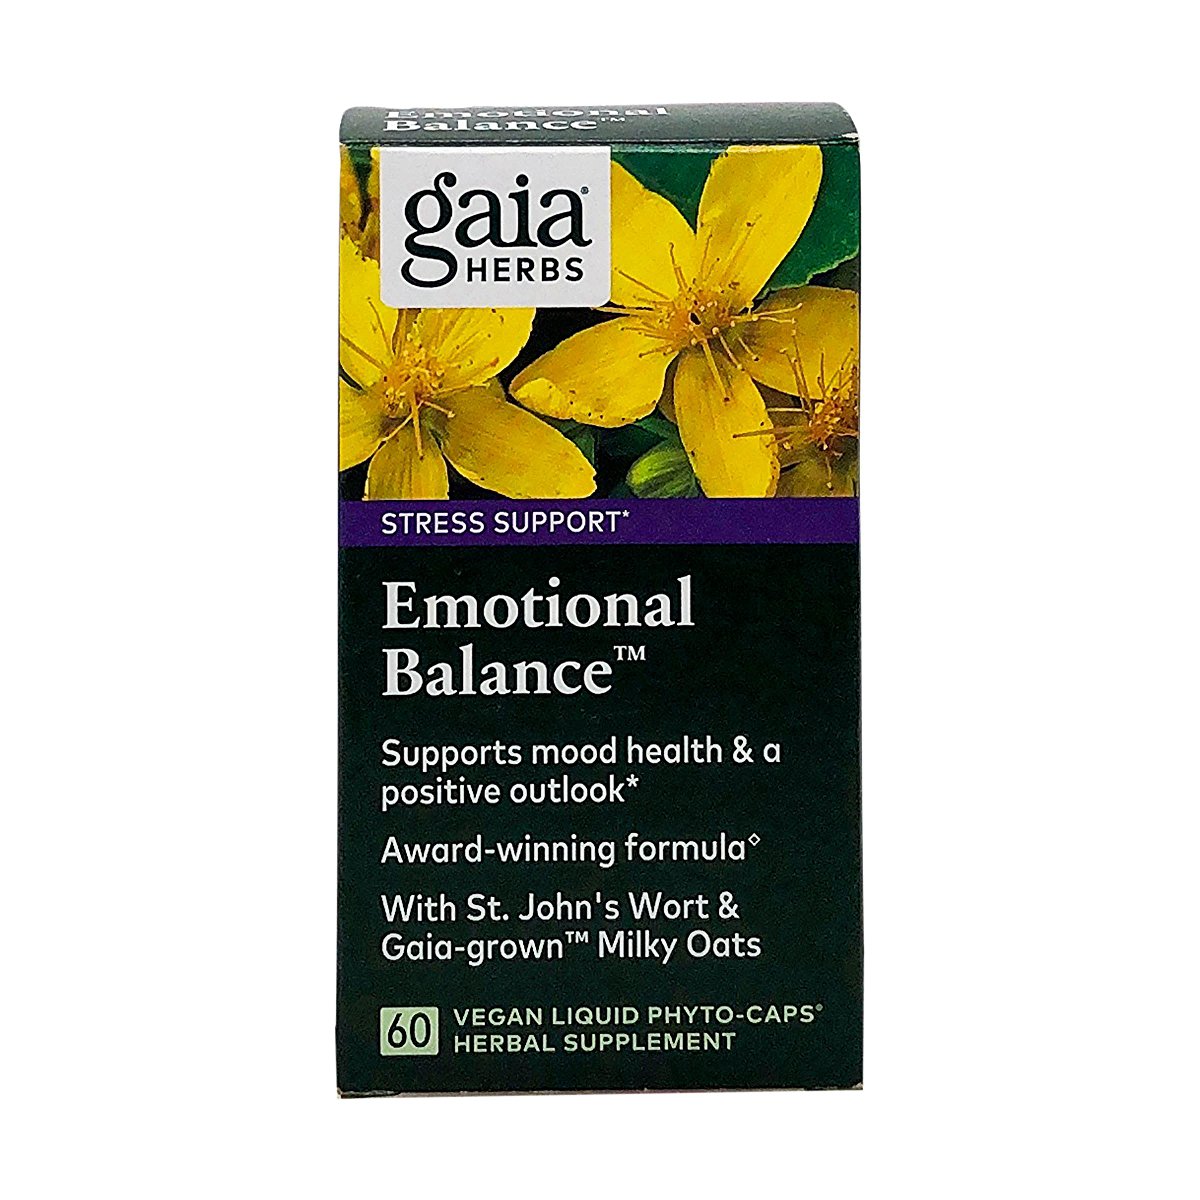 Gaia Herbs Emotional Balance 60 Vegan Liquid Phyto-Caps